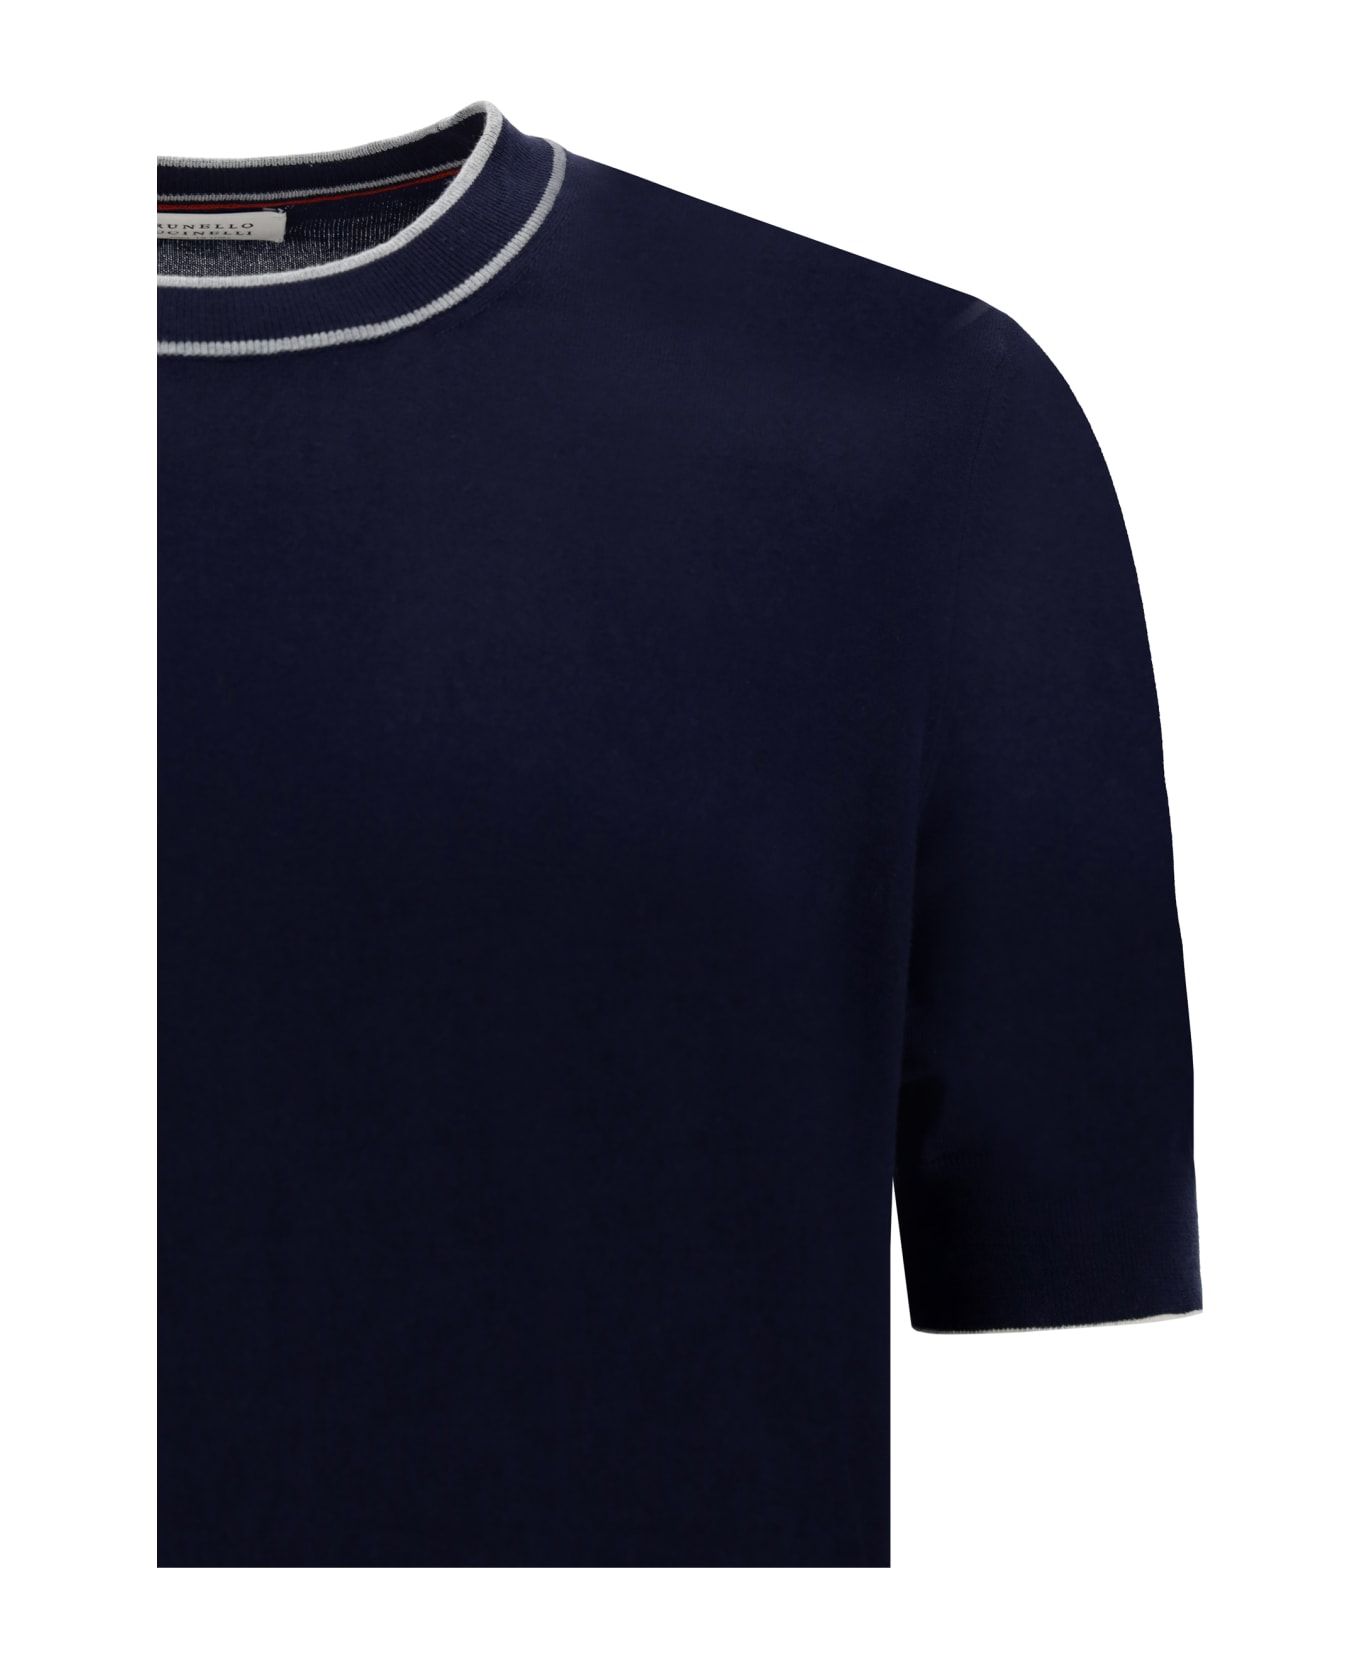 Brunello Cucinelli Short Sleeve Sweater - Blue